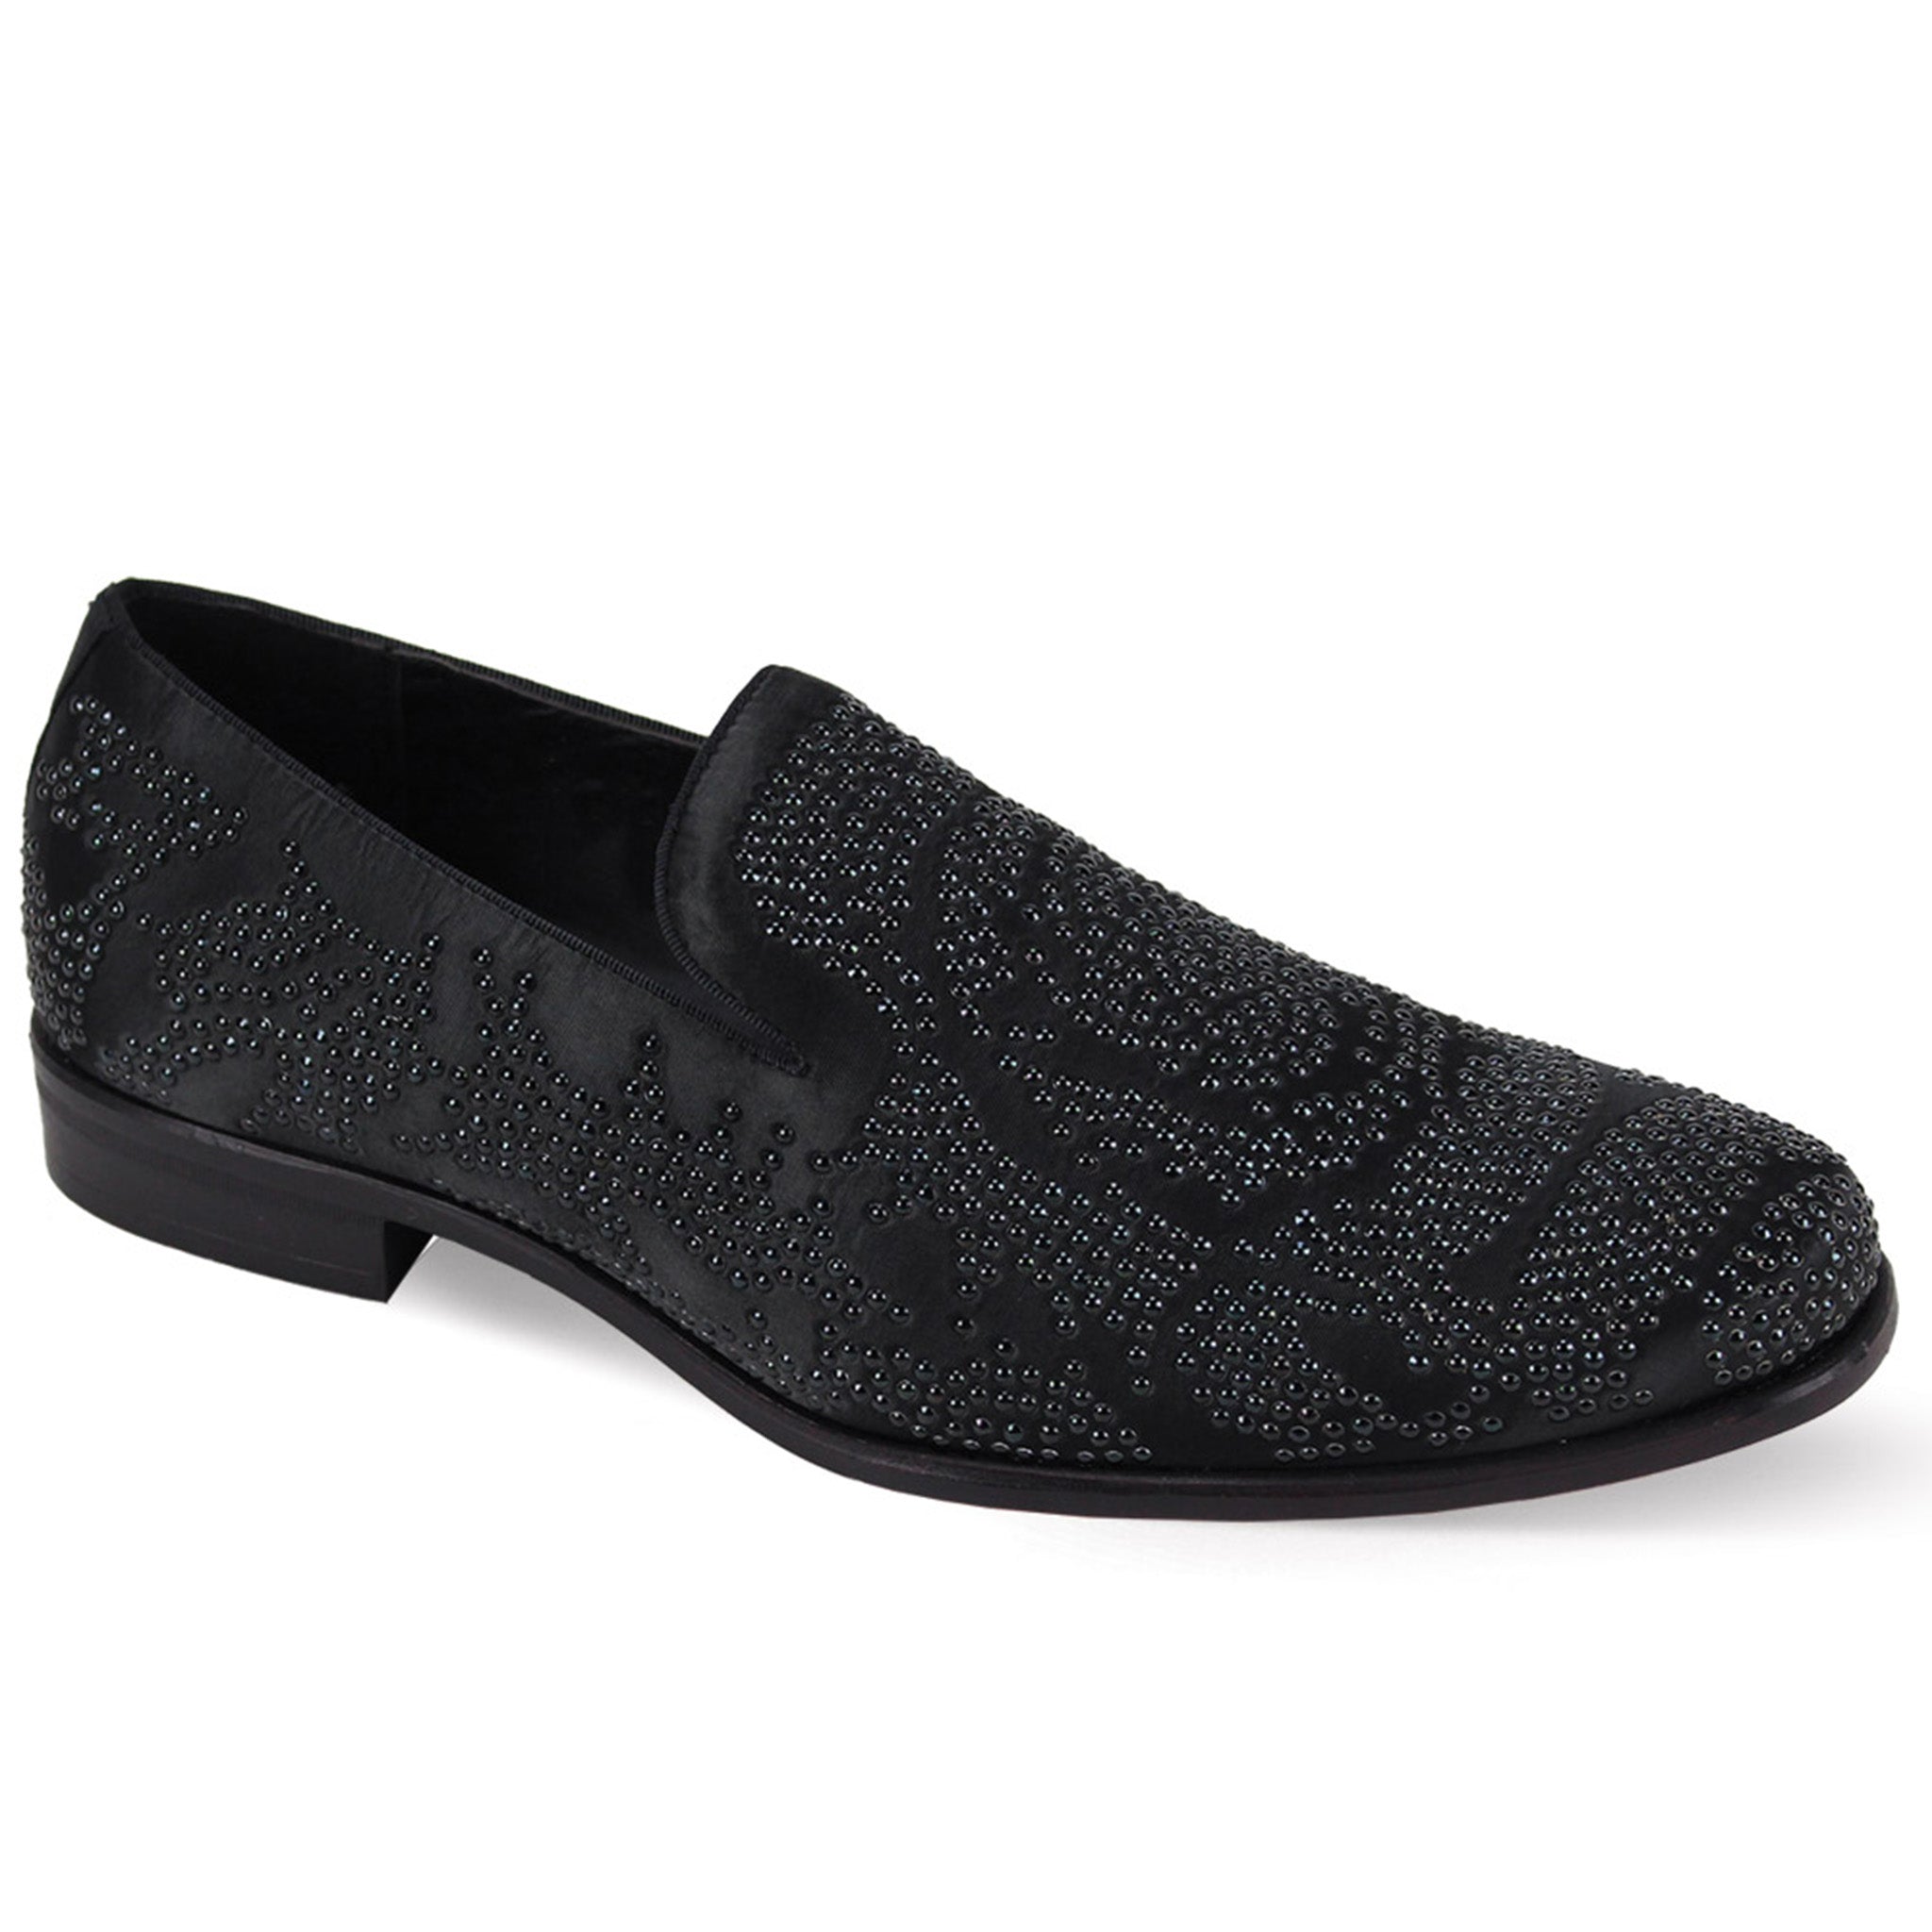 Black Studded Fashion Loafers